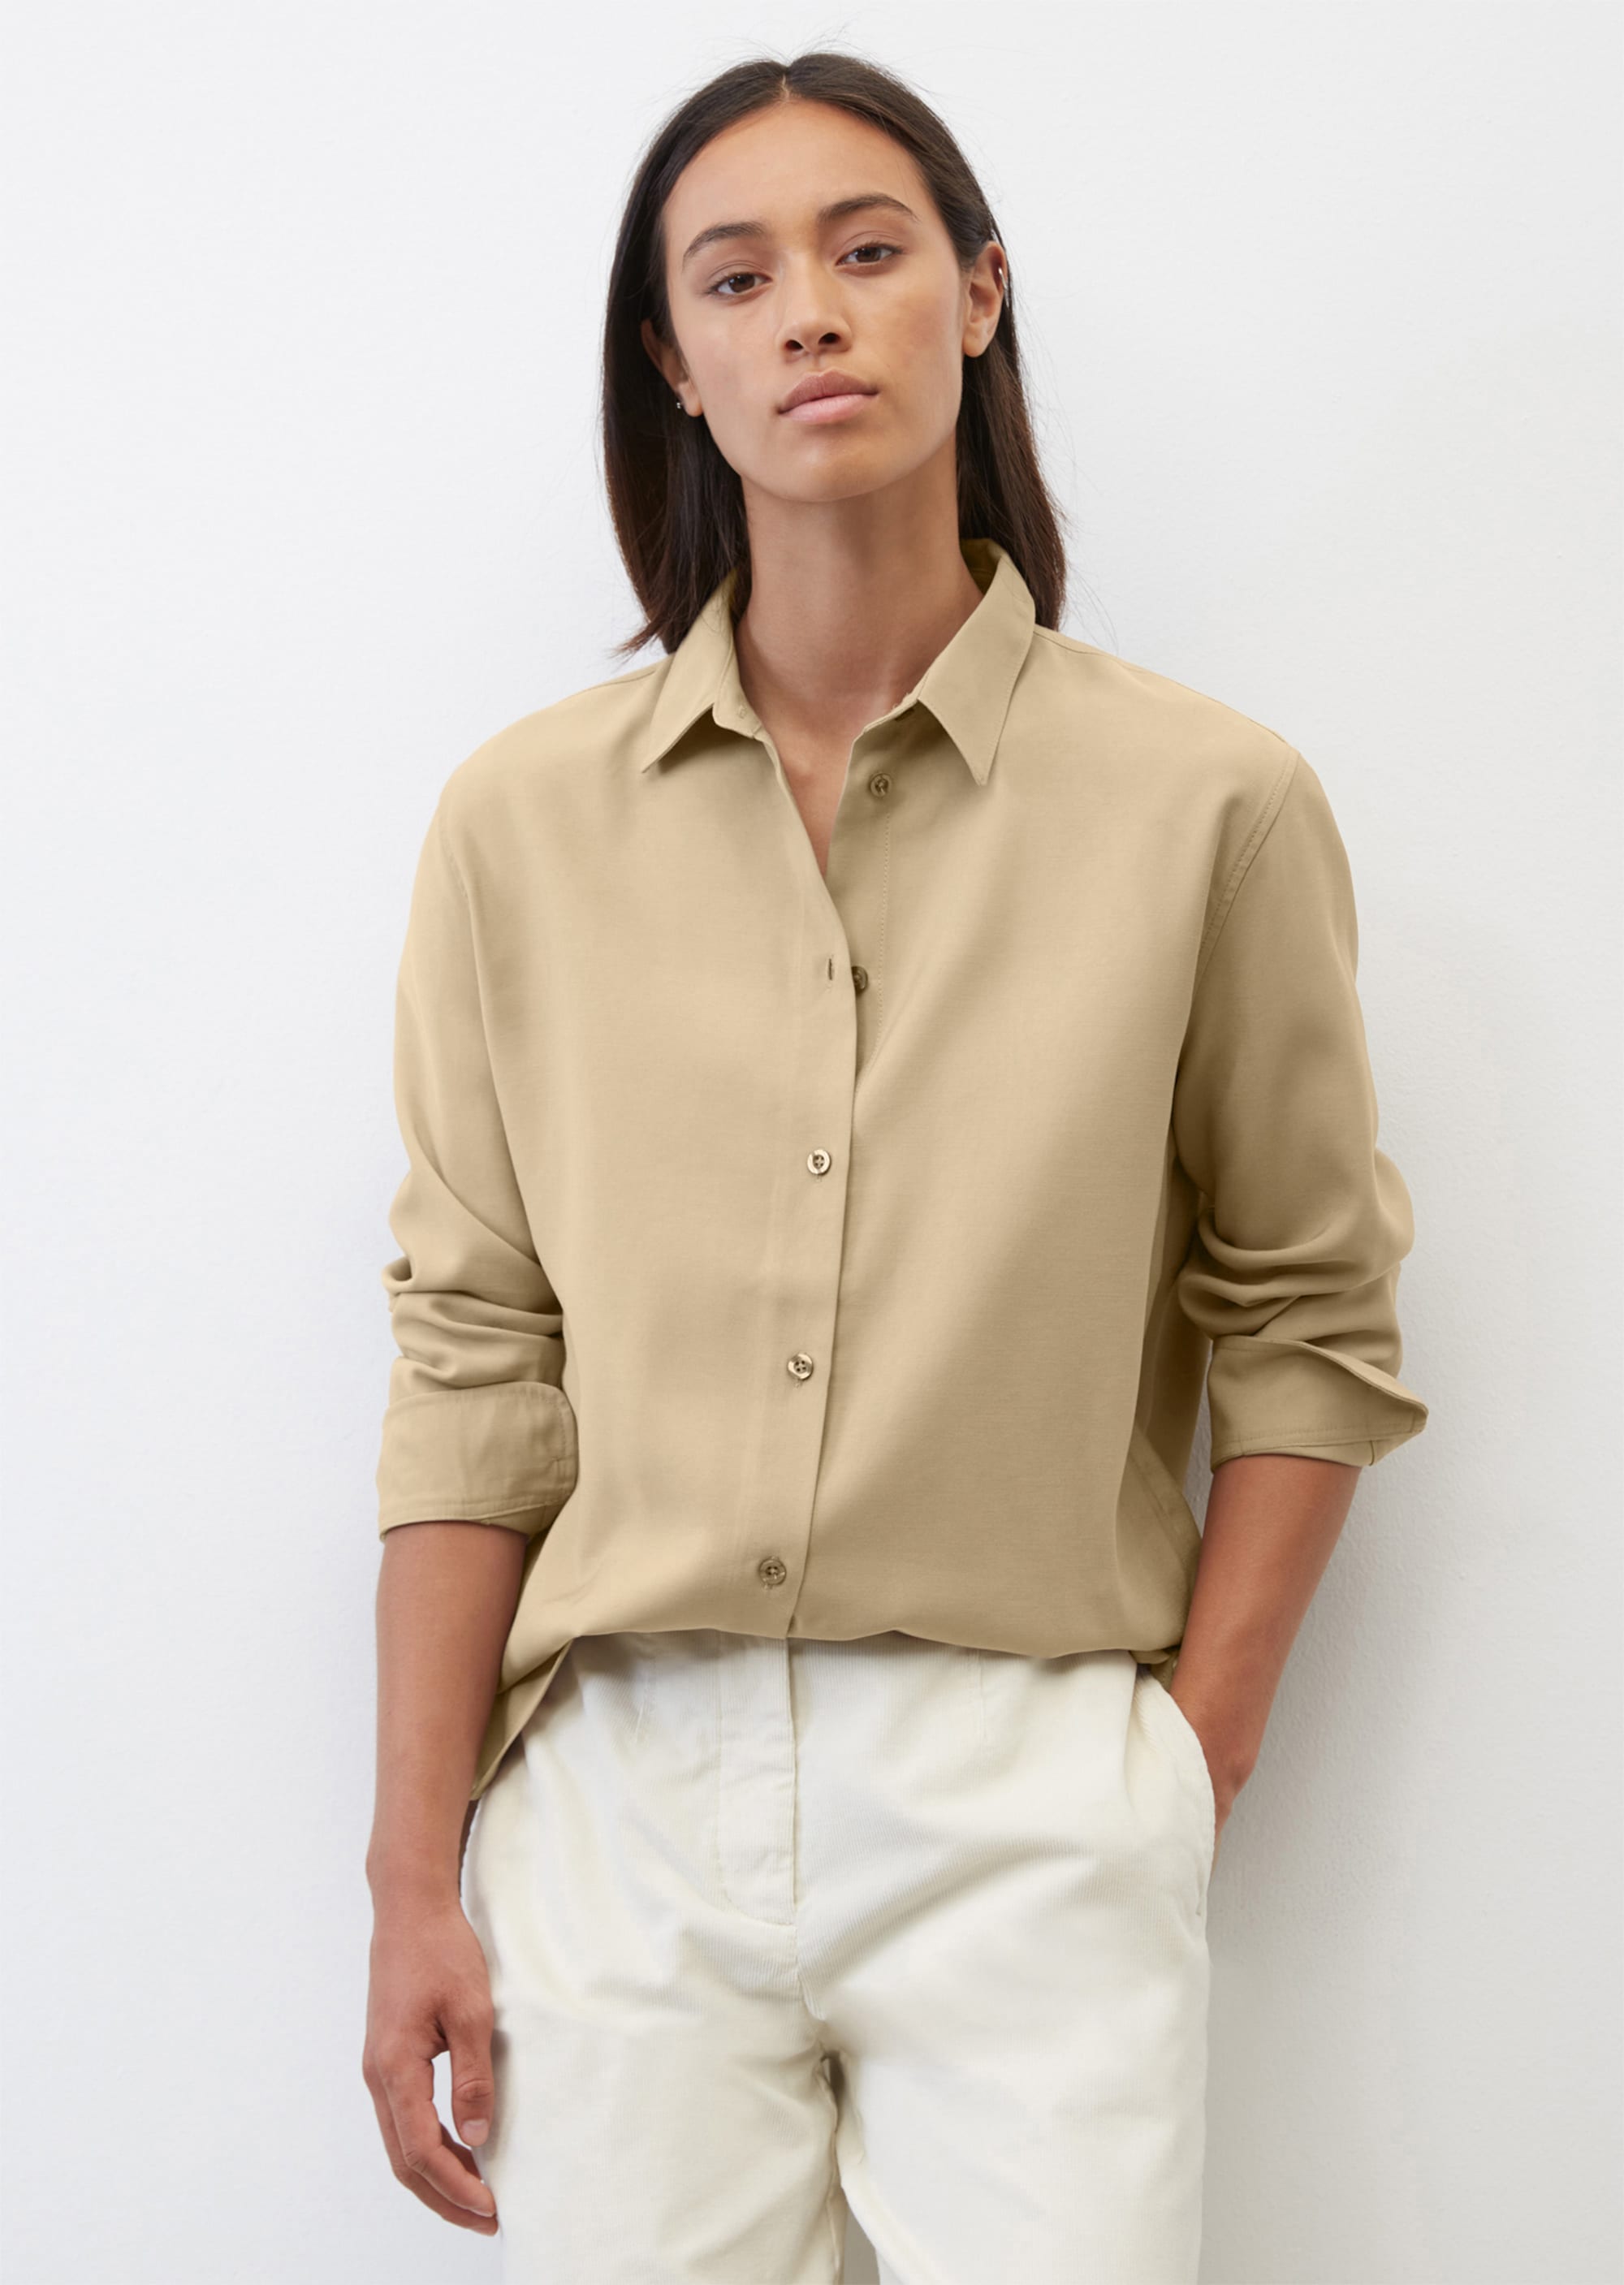 Fashion Blouses Shirt-Blouses Marc O’Polo Marc O\u2019Polo Shirt Blouse striped pattern simple style 